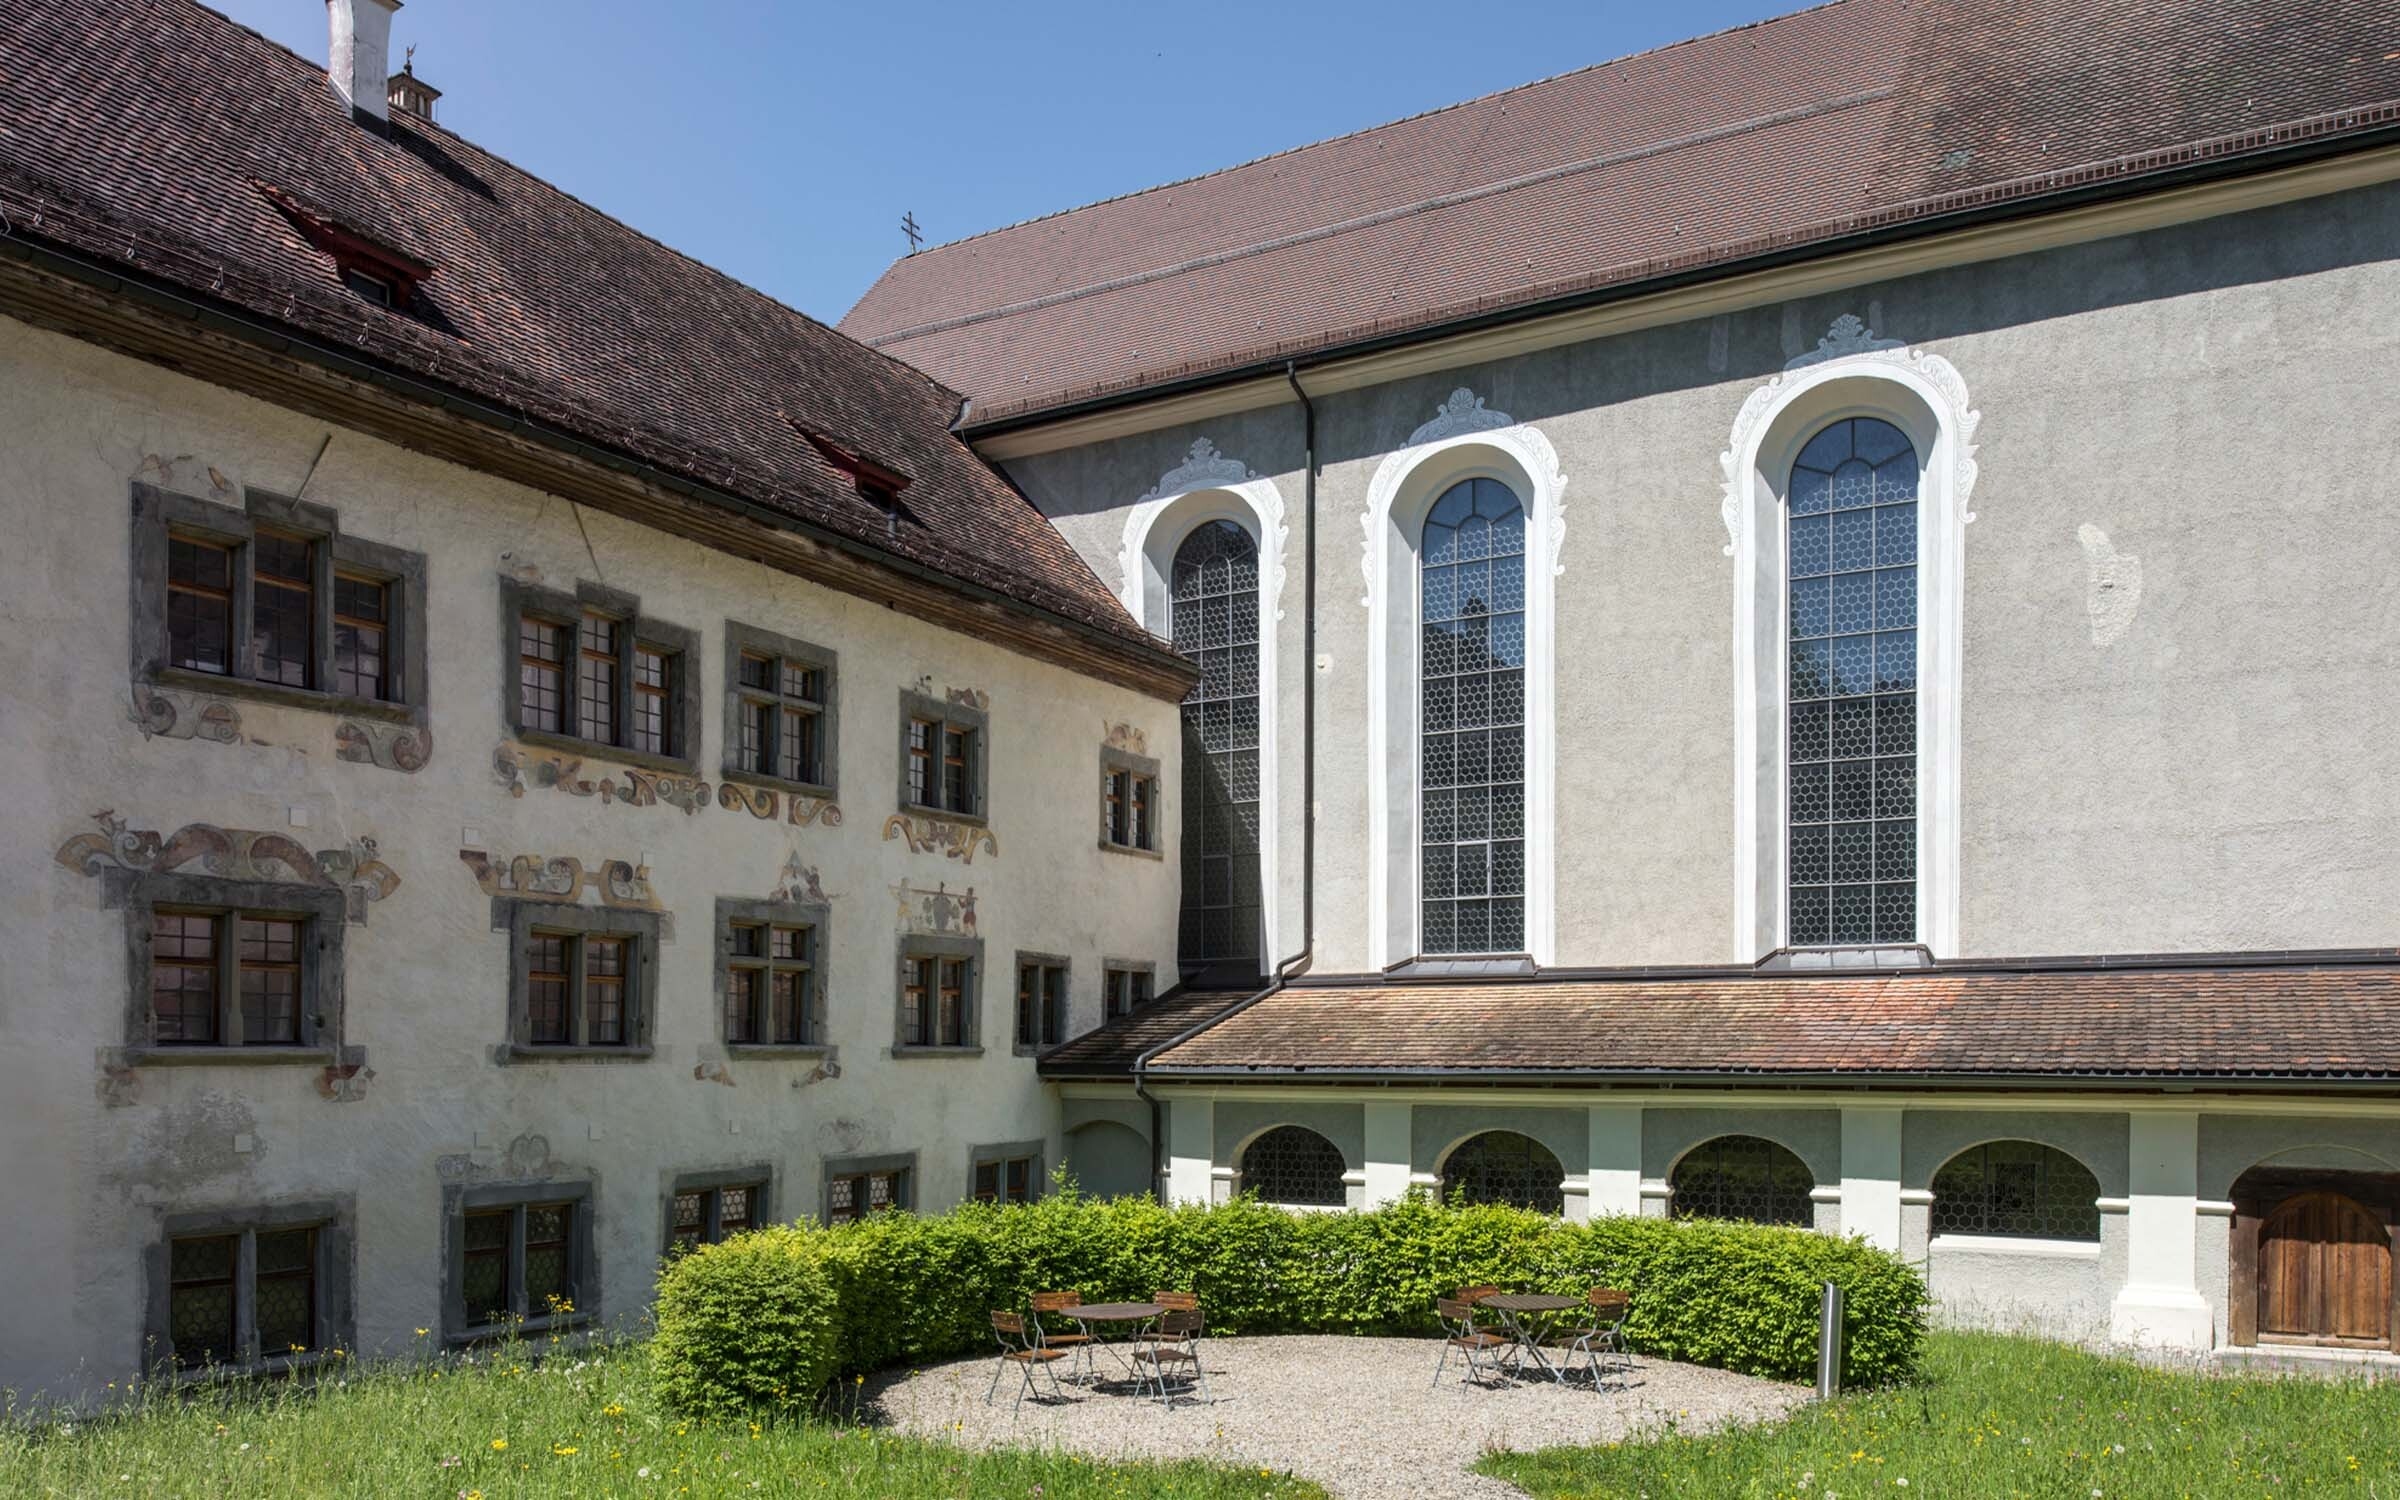 Portrait kloster fischingen swiss historic hotels 05